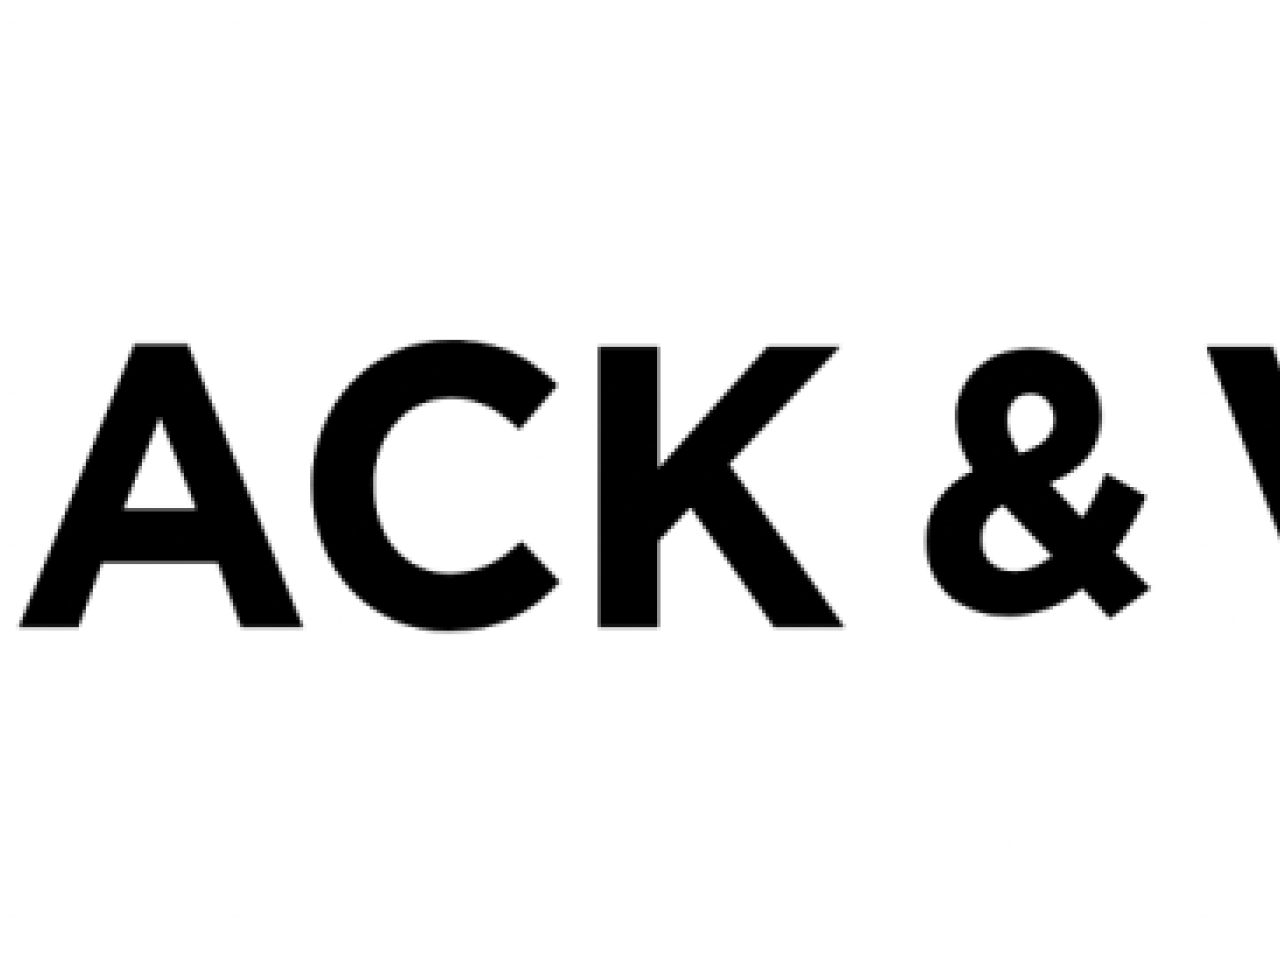 Black & Veatch Logo